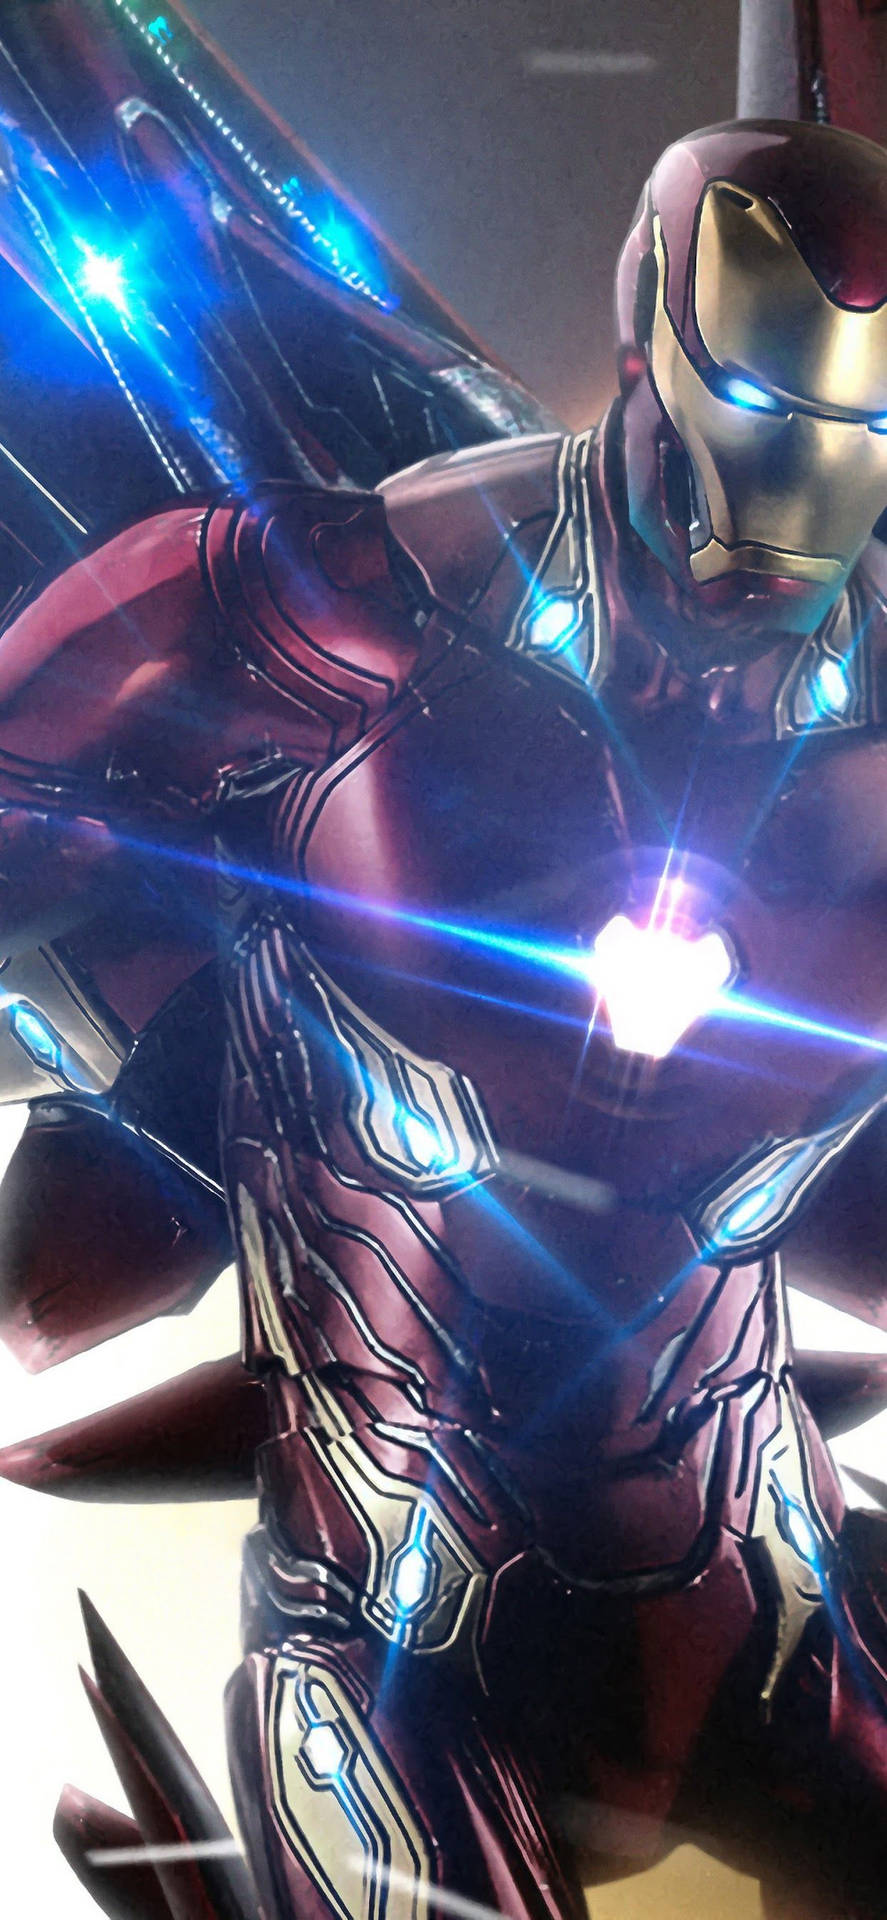 Coolcandid Iron Man Android Skulle Översättas Till Svalt Candid Iron Man Android. Wallpaper